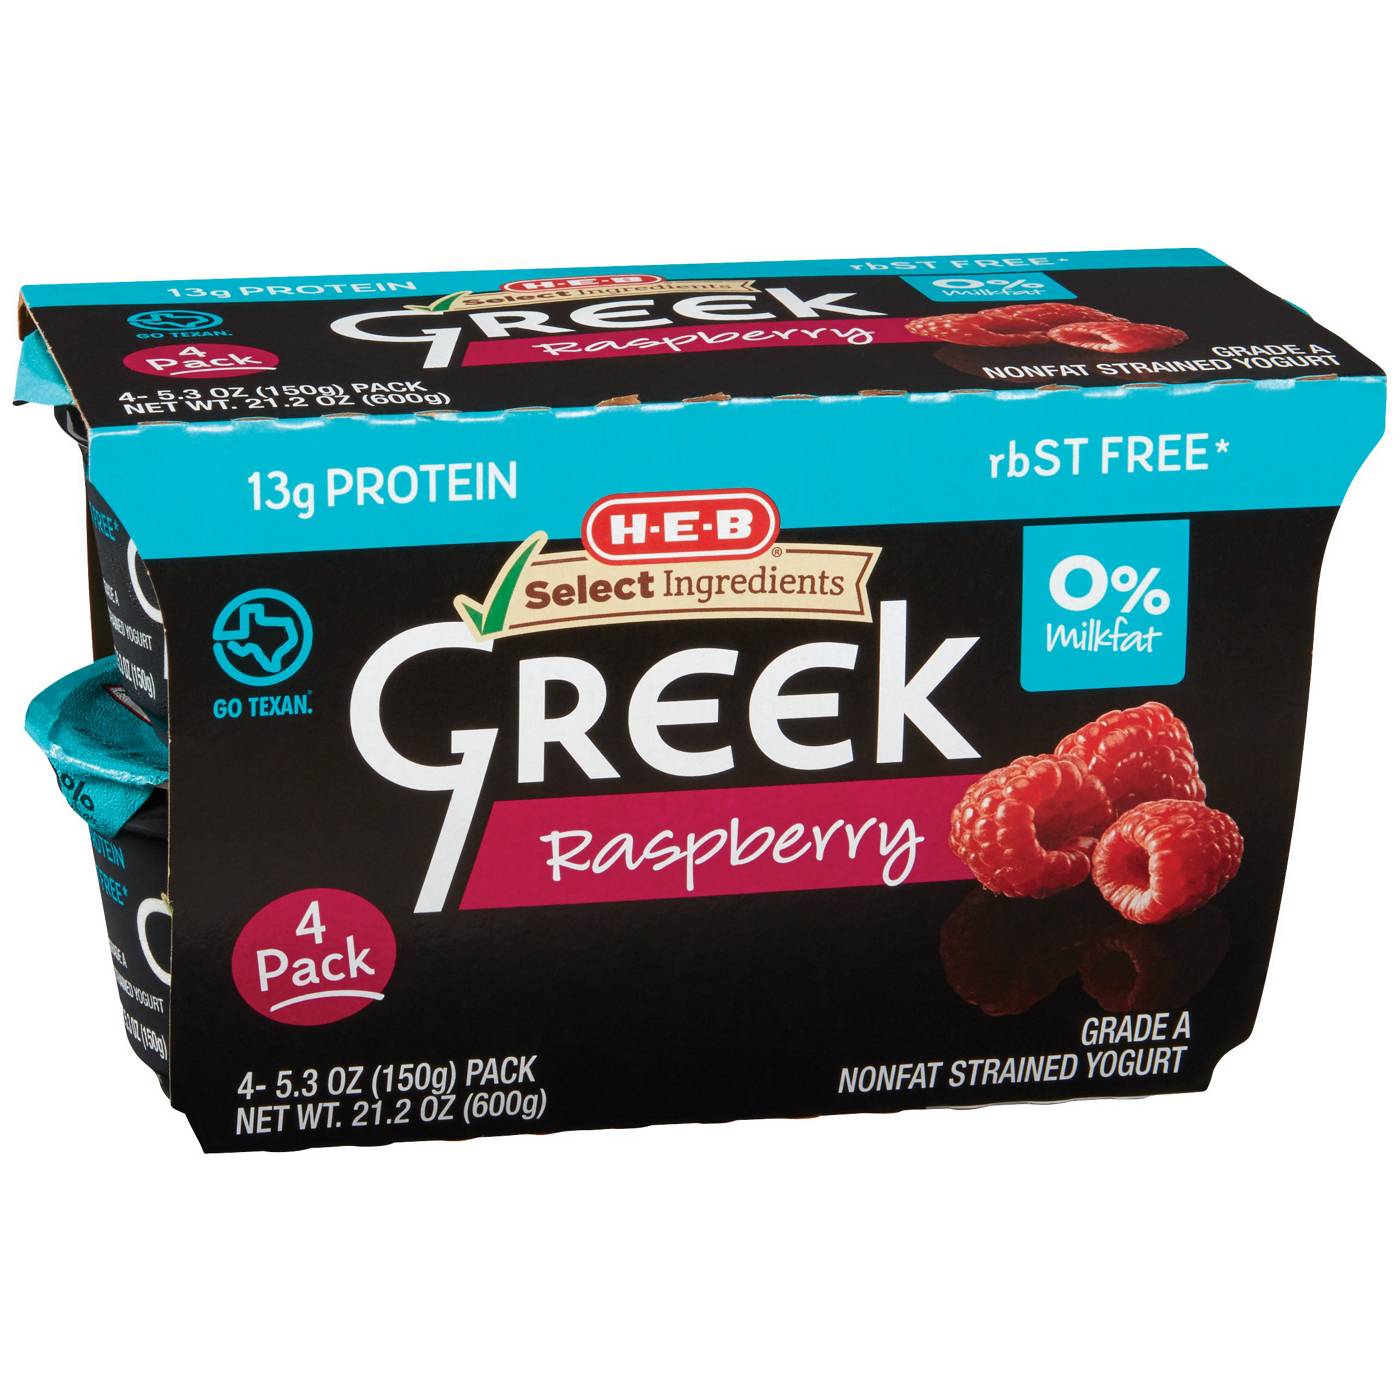 H-E-B 13g Protein Nonfat Greek Yogurt - Raspberry; image 1 of 2